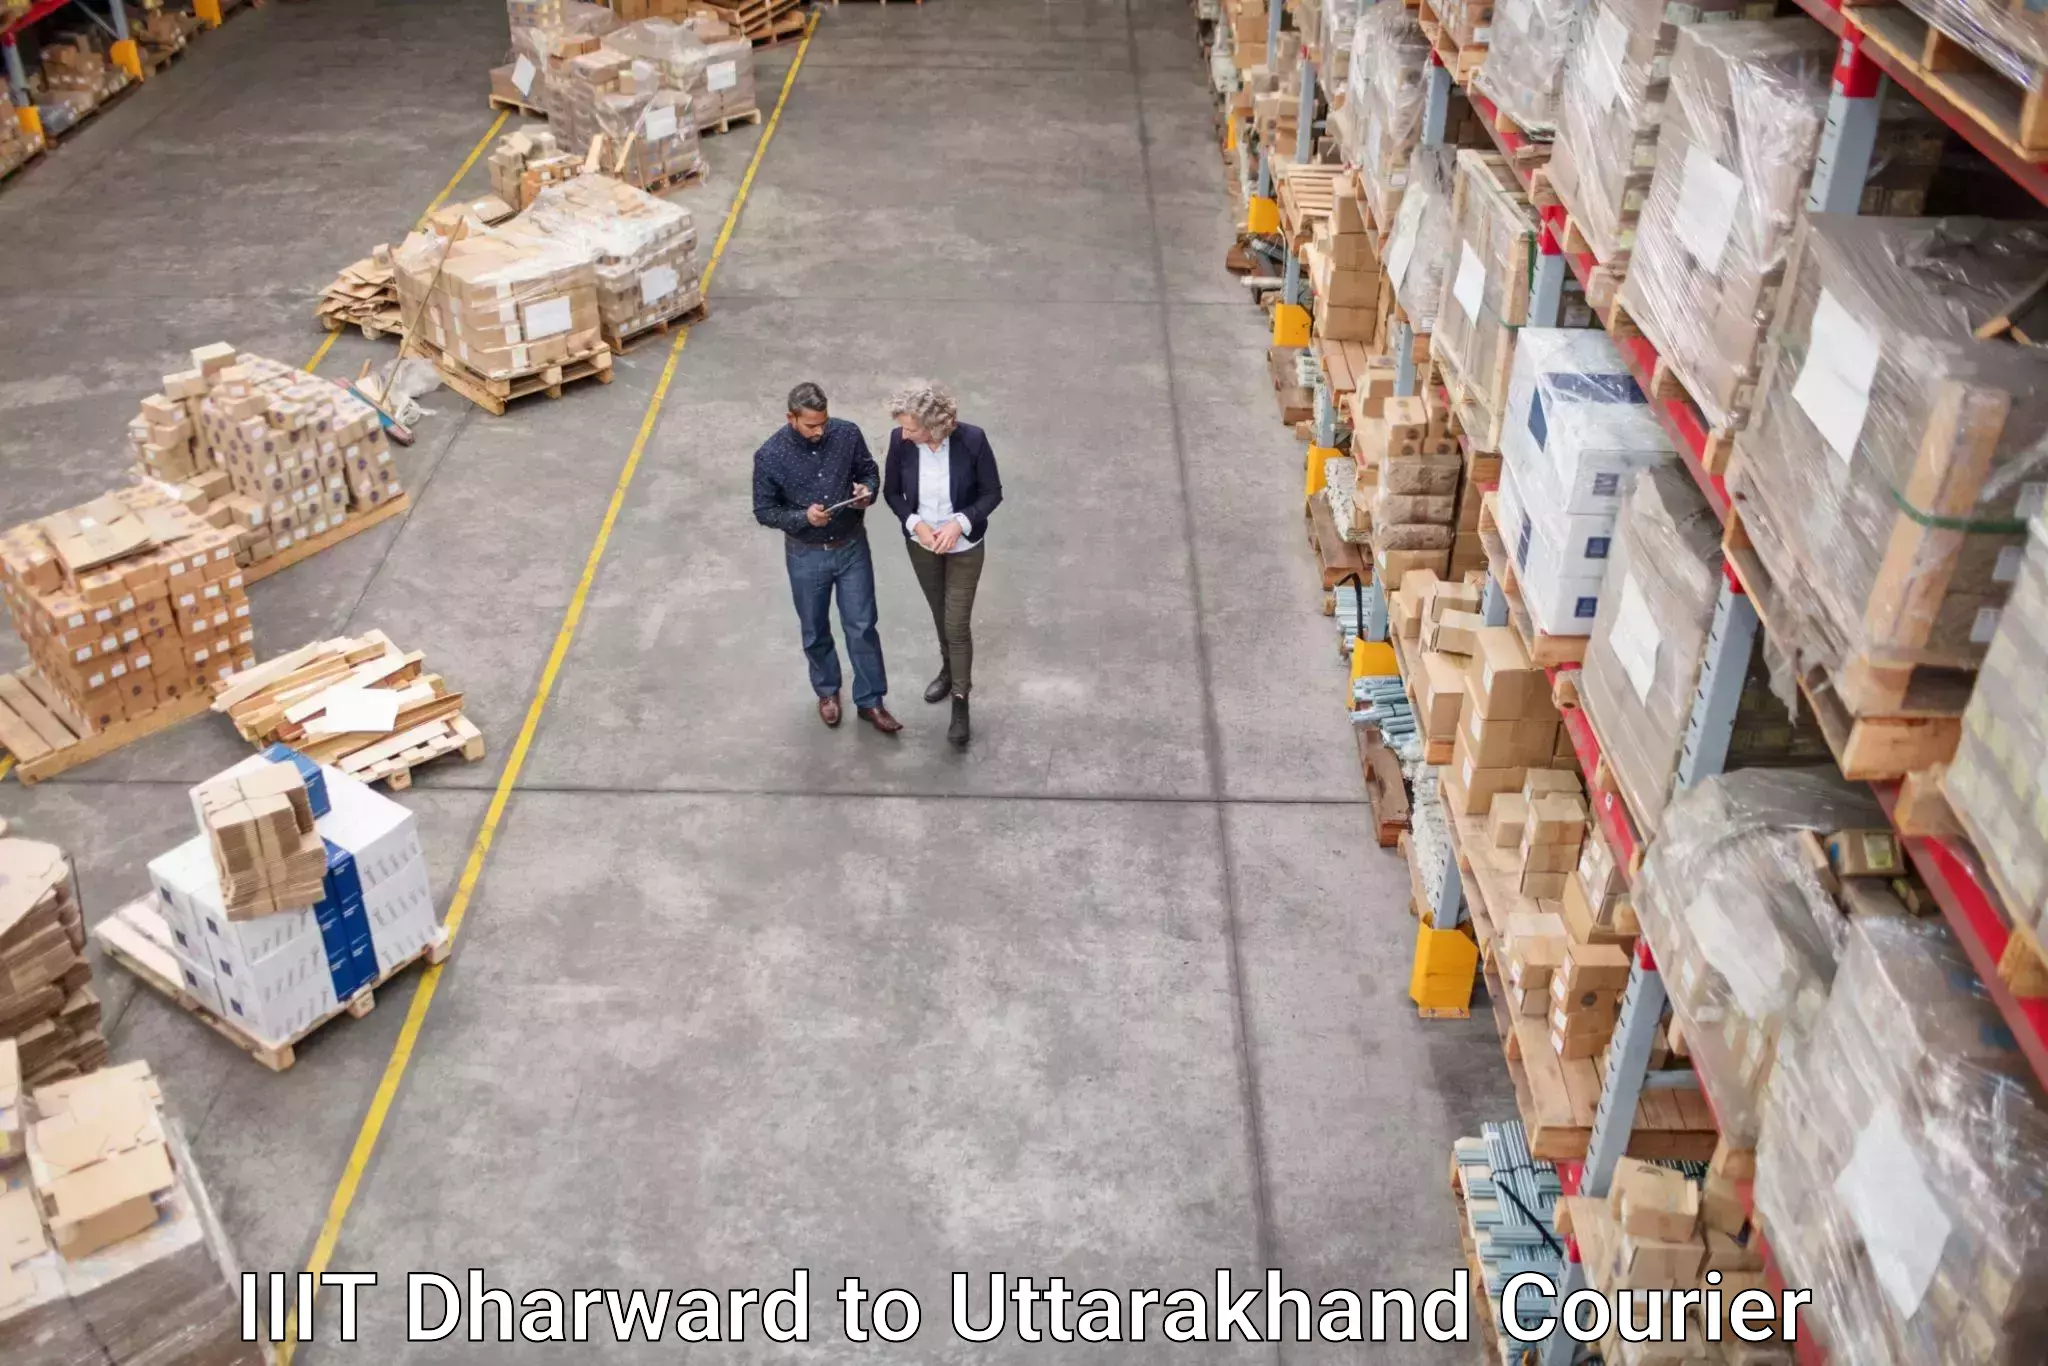 Courier service partnerships IIIT Dharward to Pithoragarh